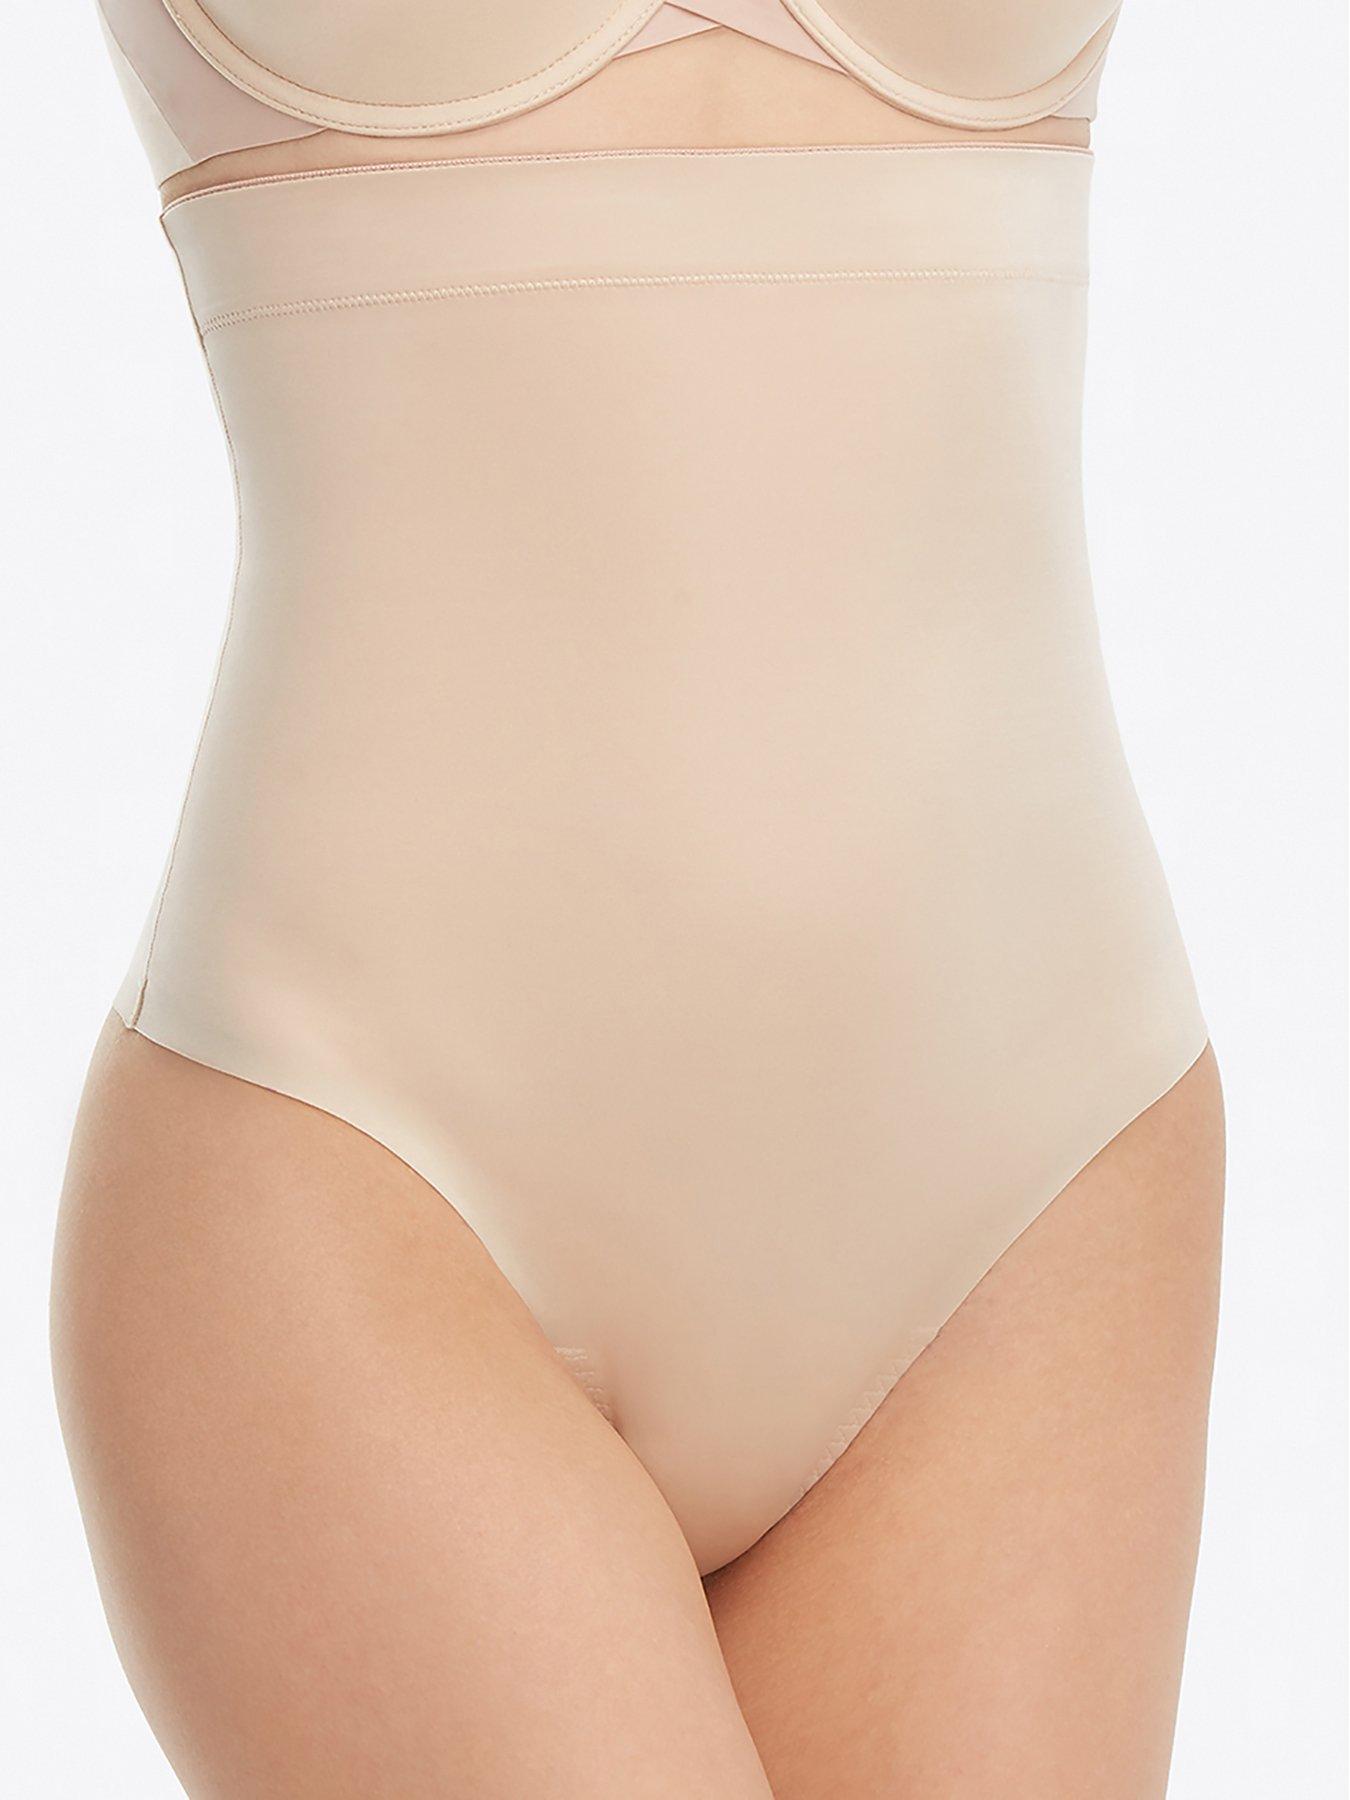 FLEXEES Women's Nude Beige High-Waisted Control Shapewear Briefs Size XL